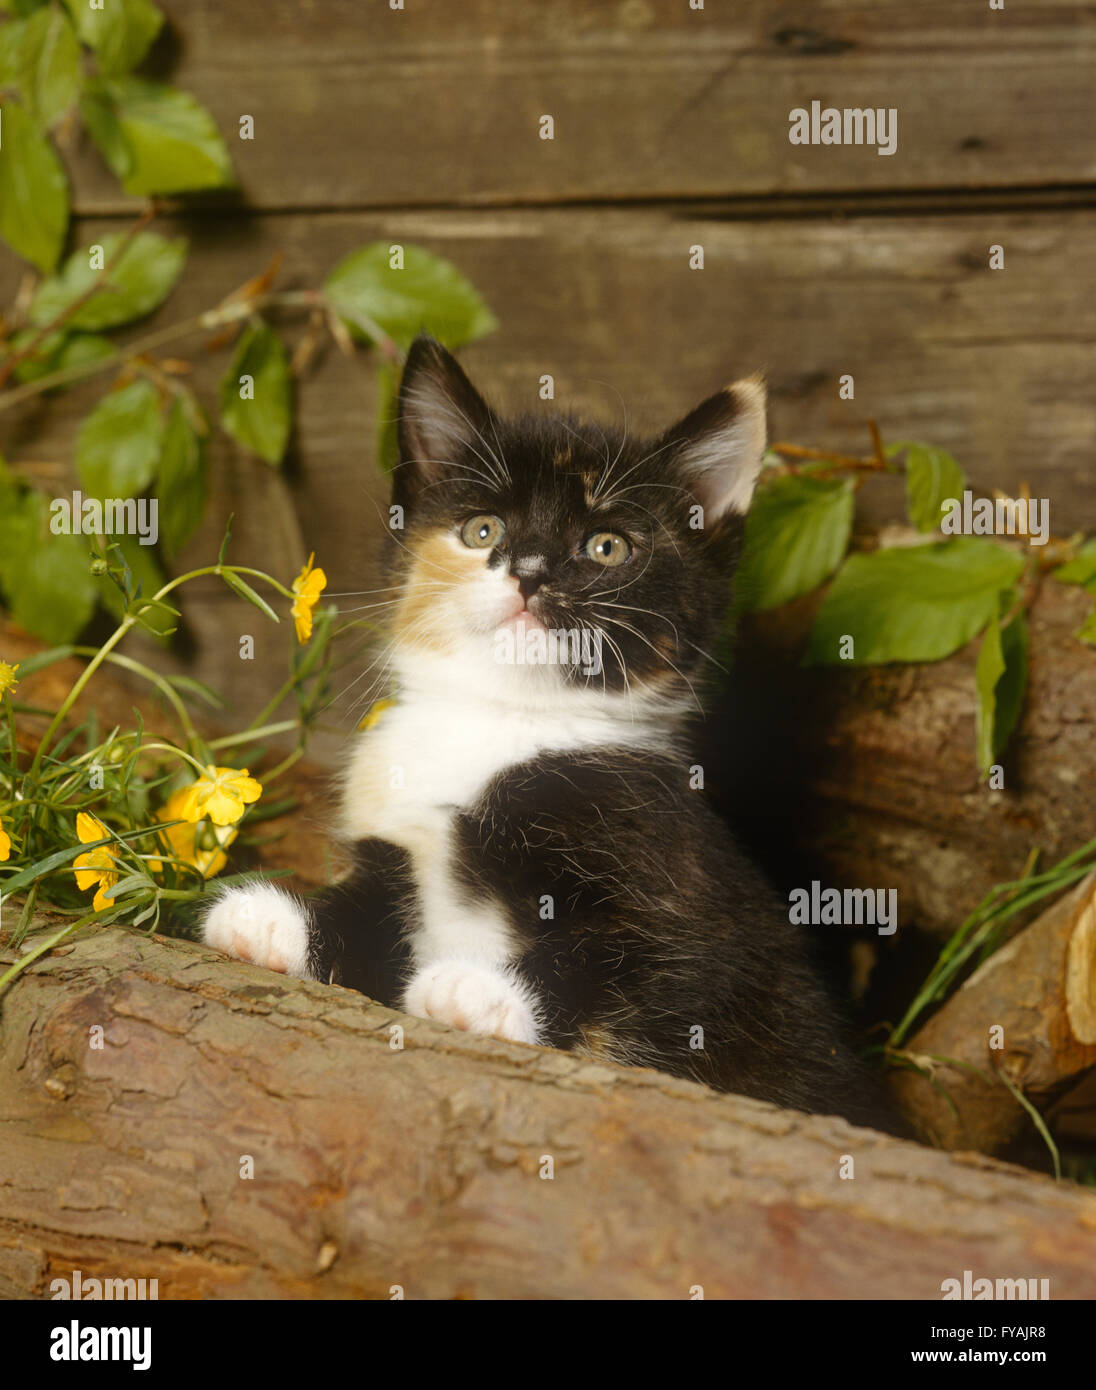 Kitten looking startled, outside. Stock Photo